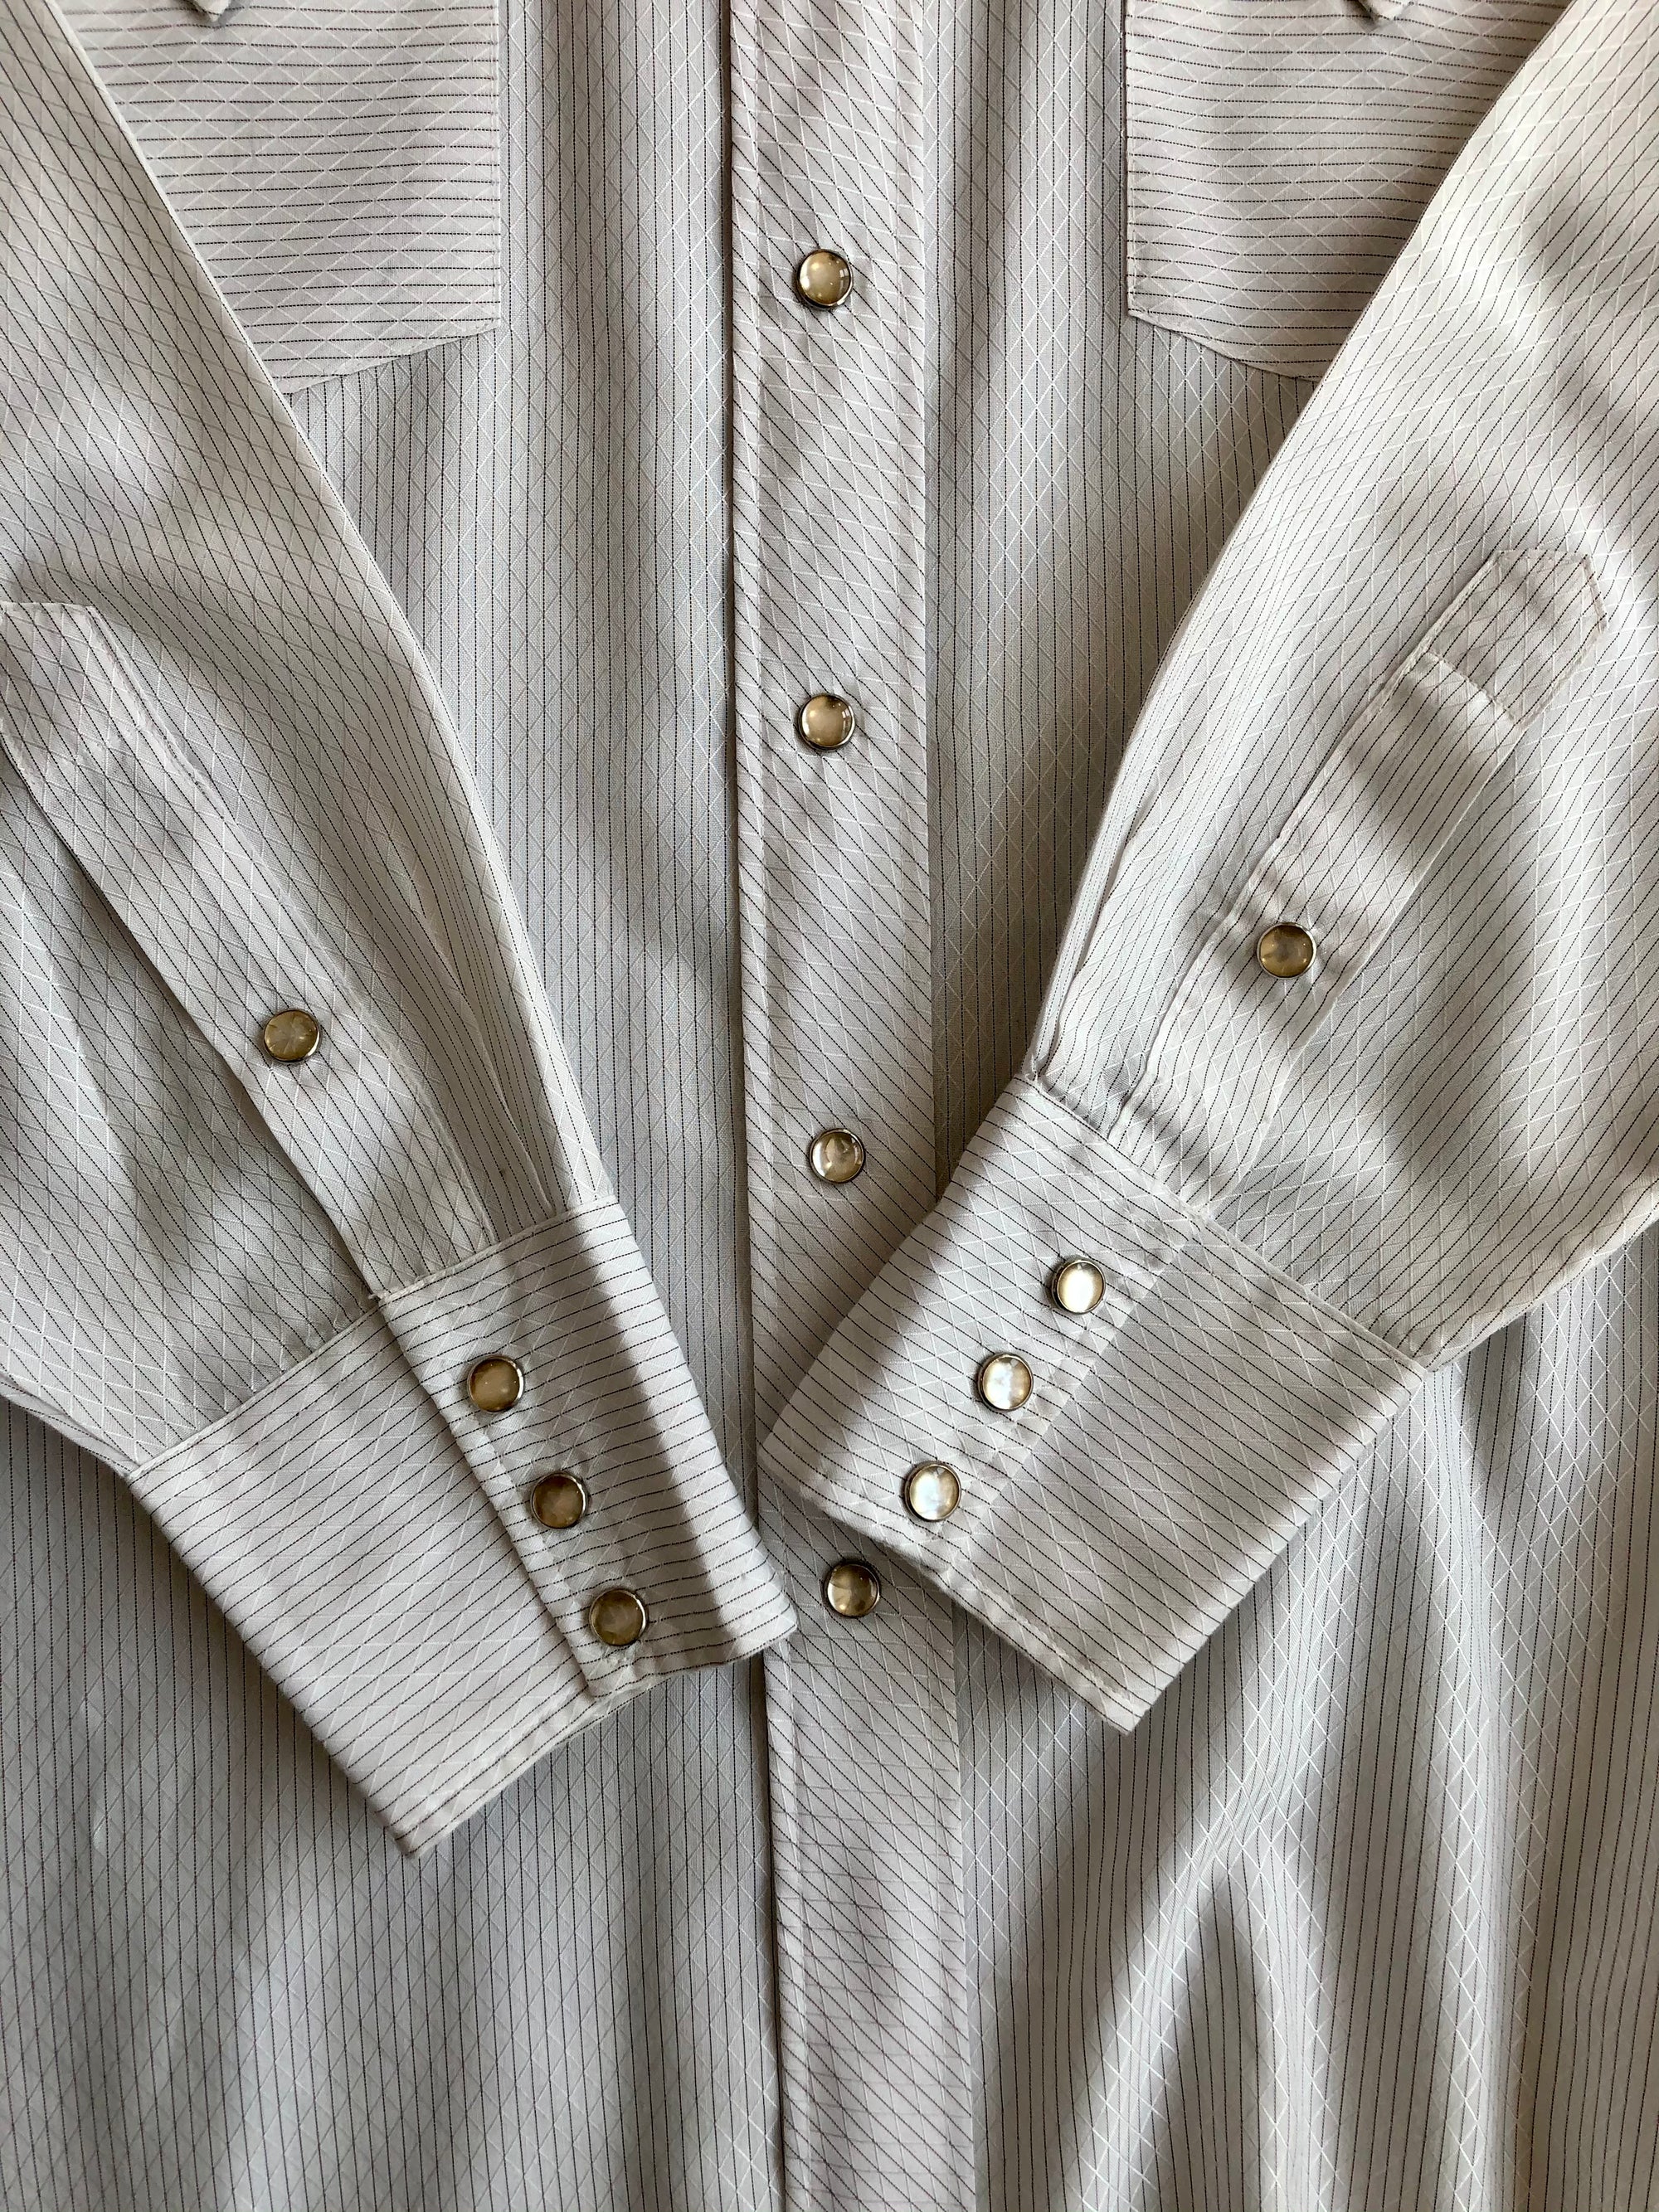 Vintage Ranchwear Button Up